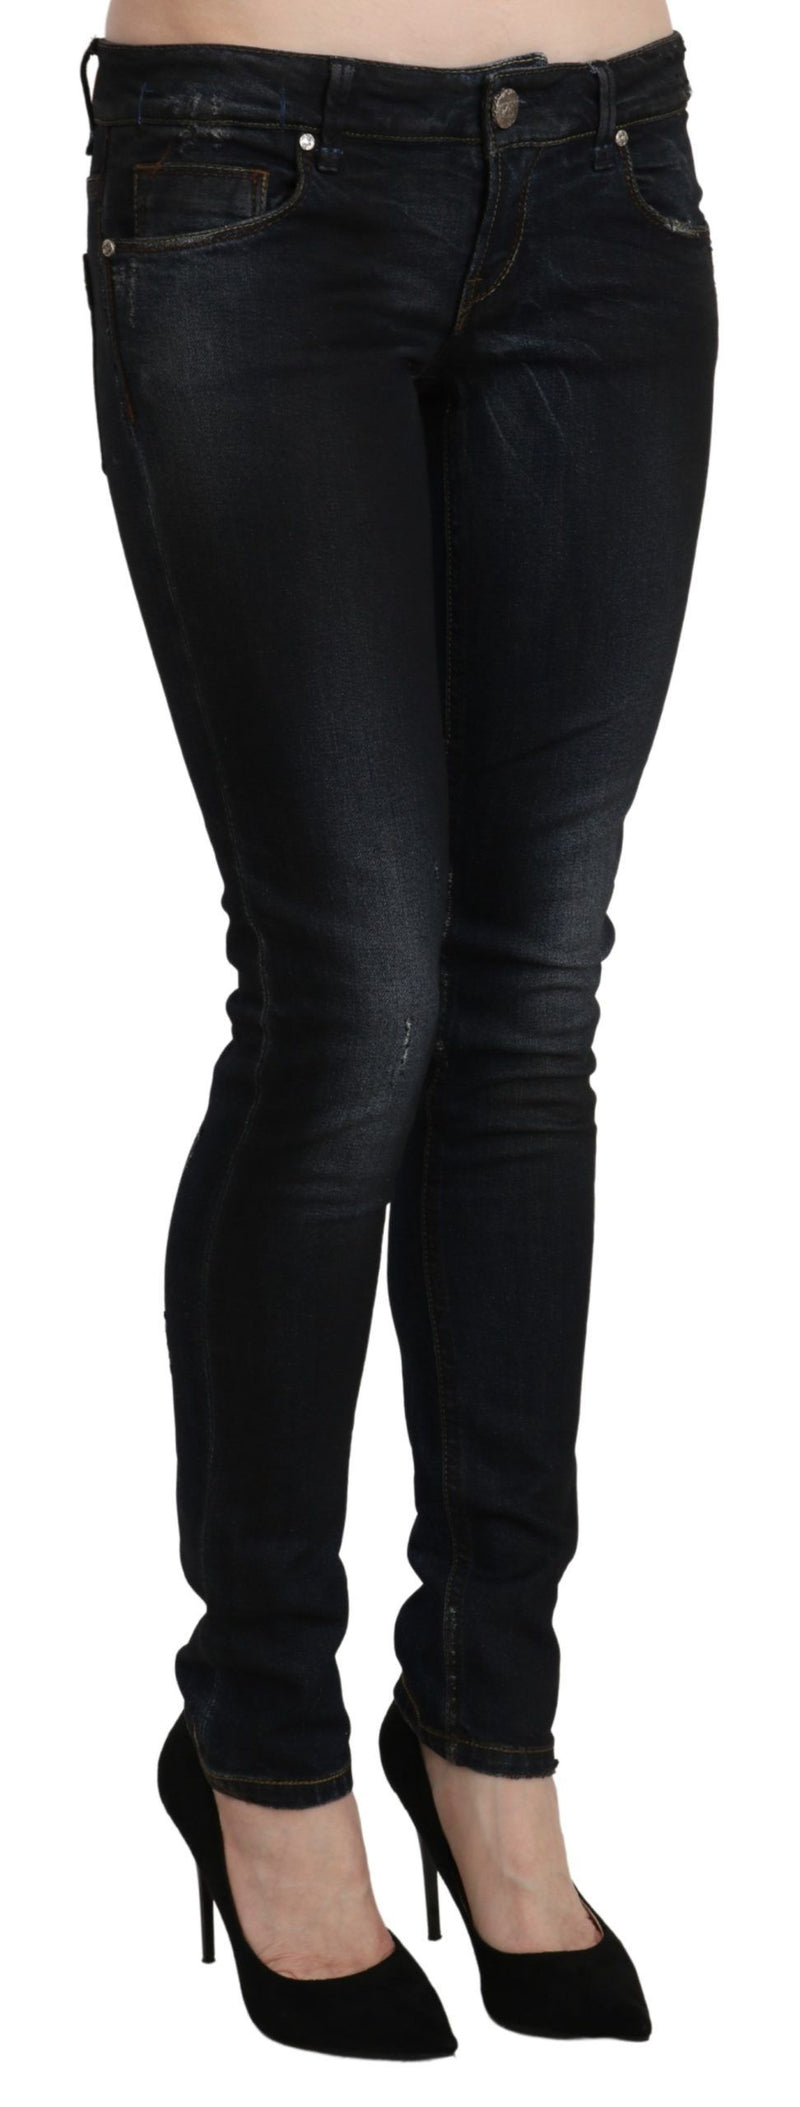 Acht Sleek Black Washed Skinny Women's Jeans